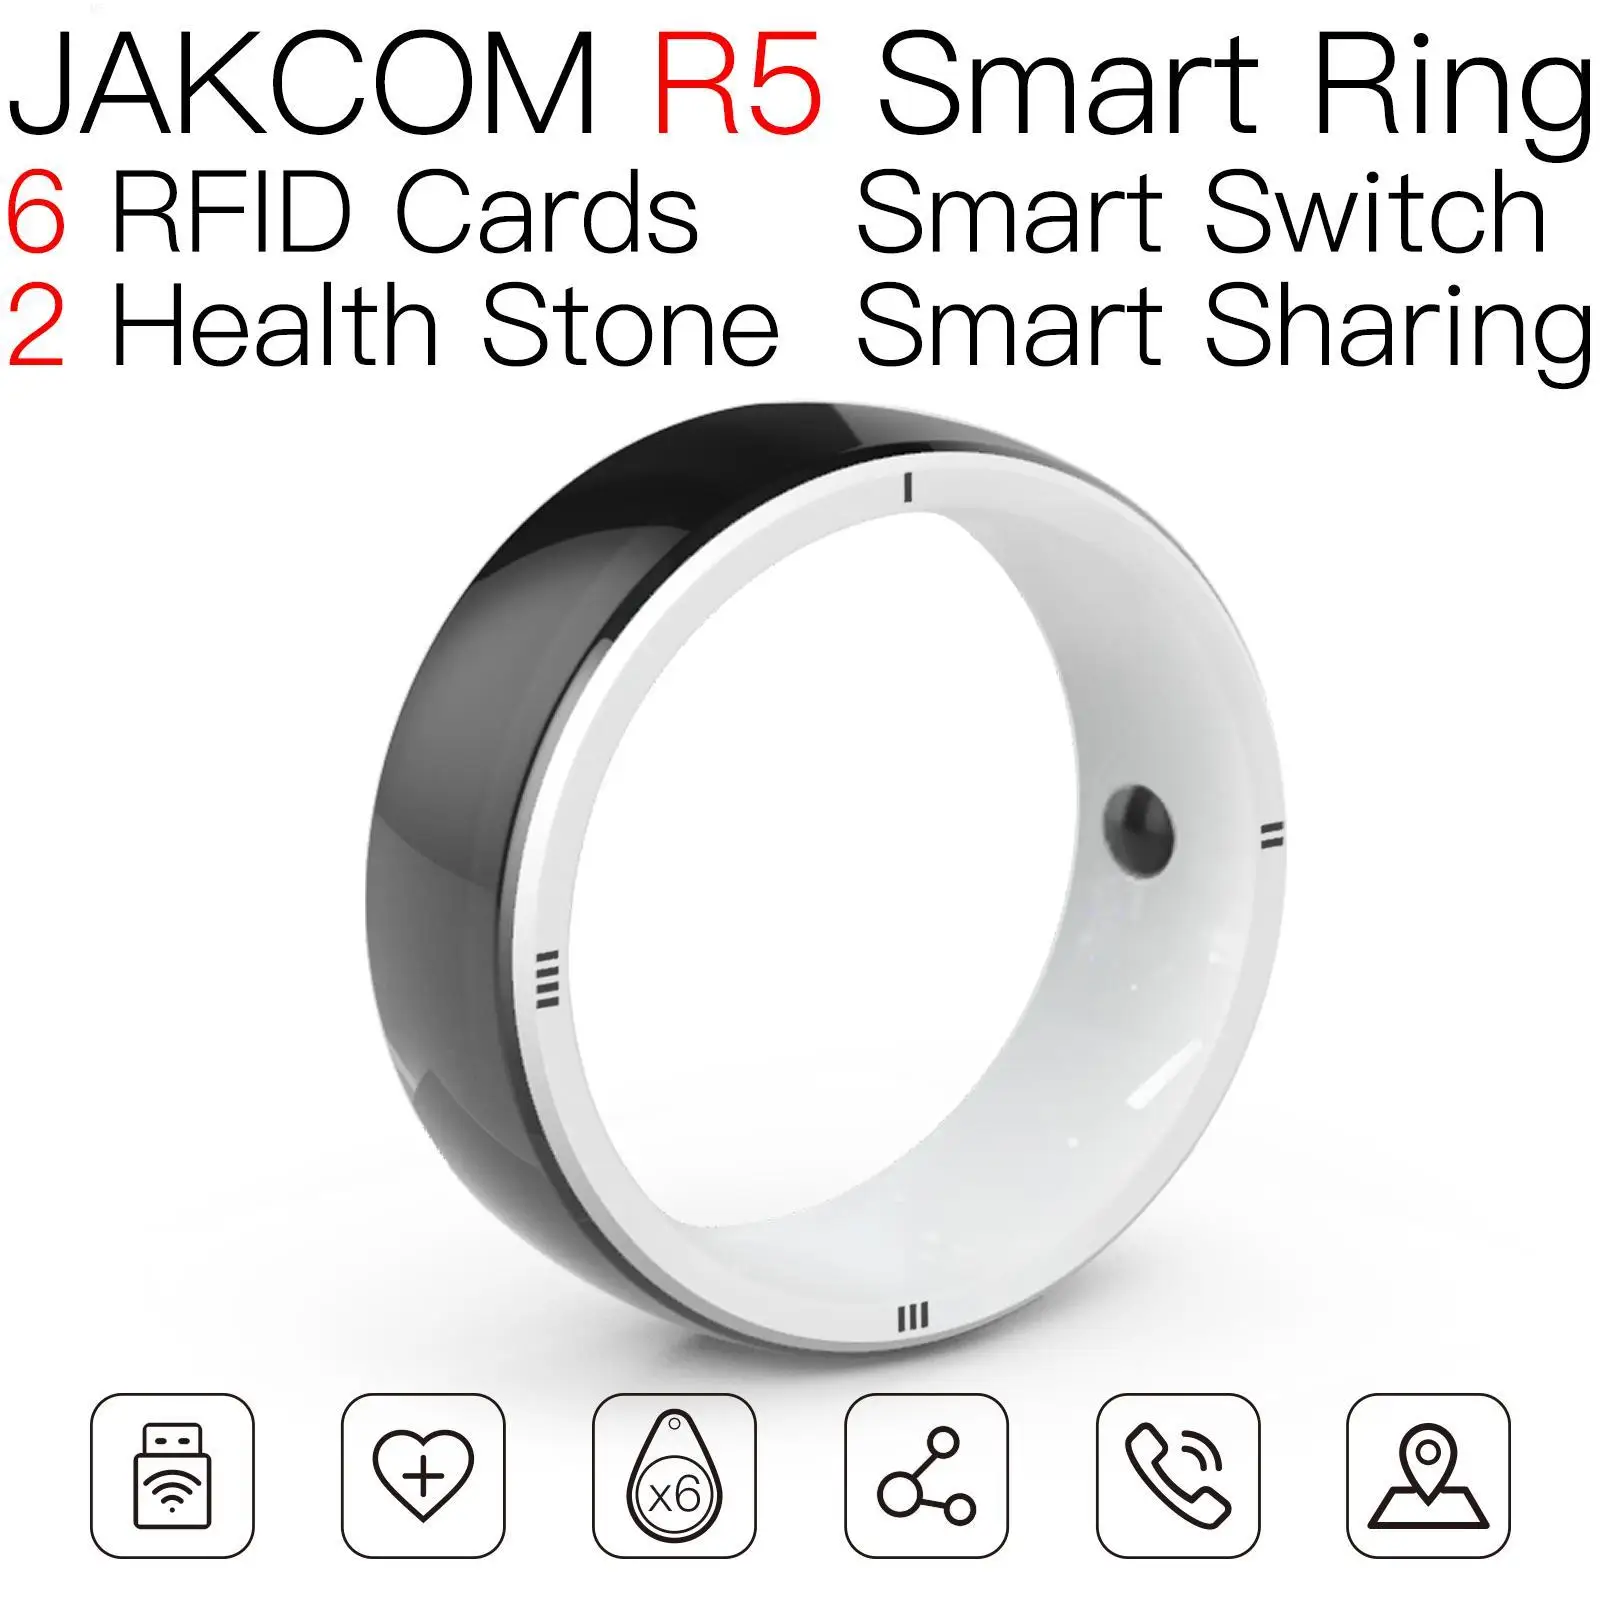 

JAKCOM R5 Smart Ring Newer than 125khz rfid writable design tags us id card amino cards mine tag nfc cmc powder